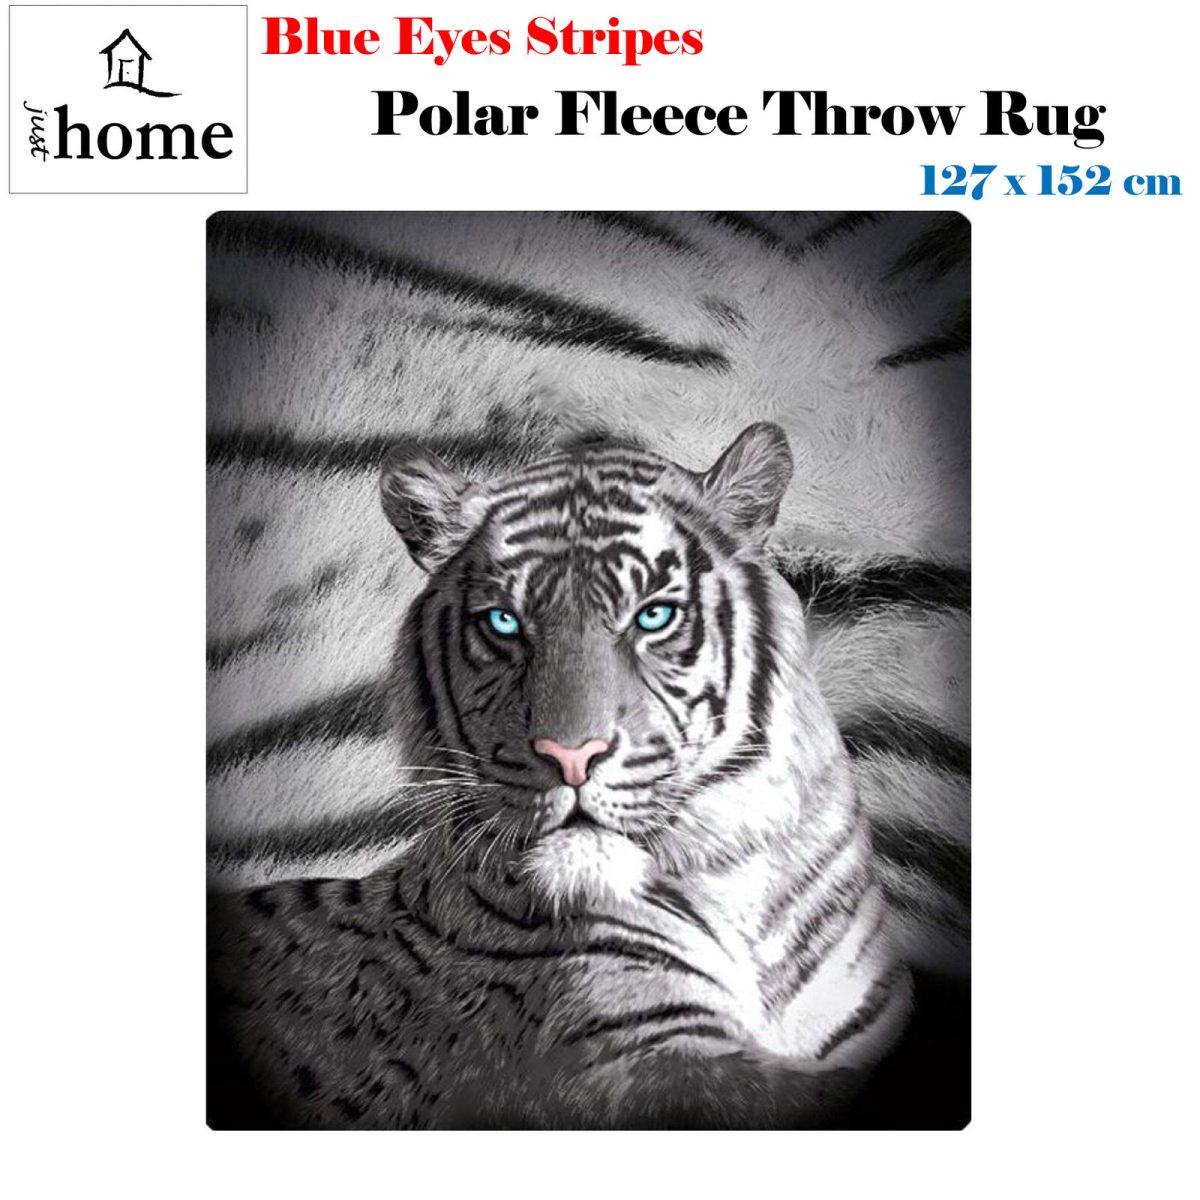 Just Home Blue Eyes Stripes Tiger Polar Fleece Throw Rug